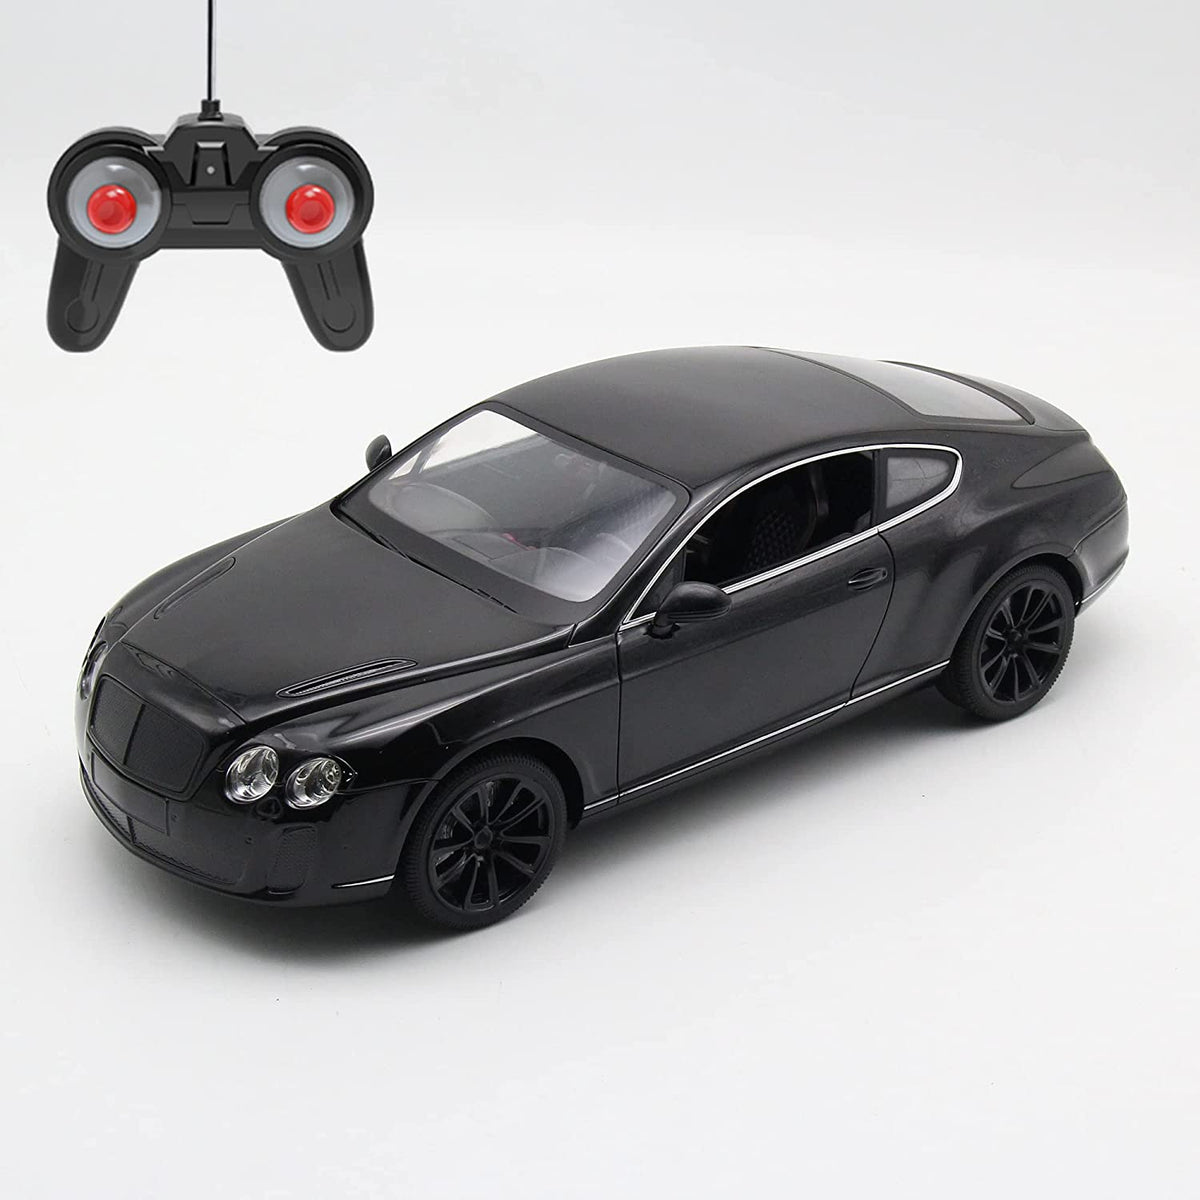 Playzu R/C 1:24 Scale Grand Tourer Vehicle, Black - Remote Control Car for Kids Ages 6+